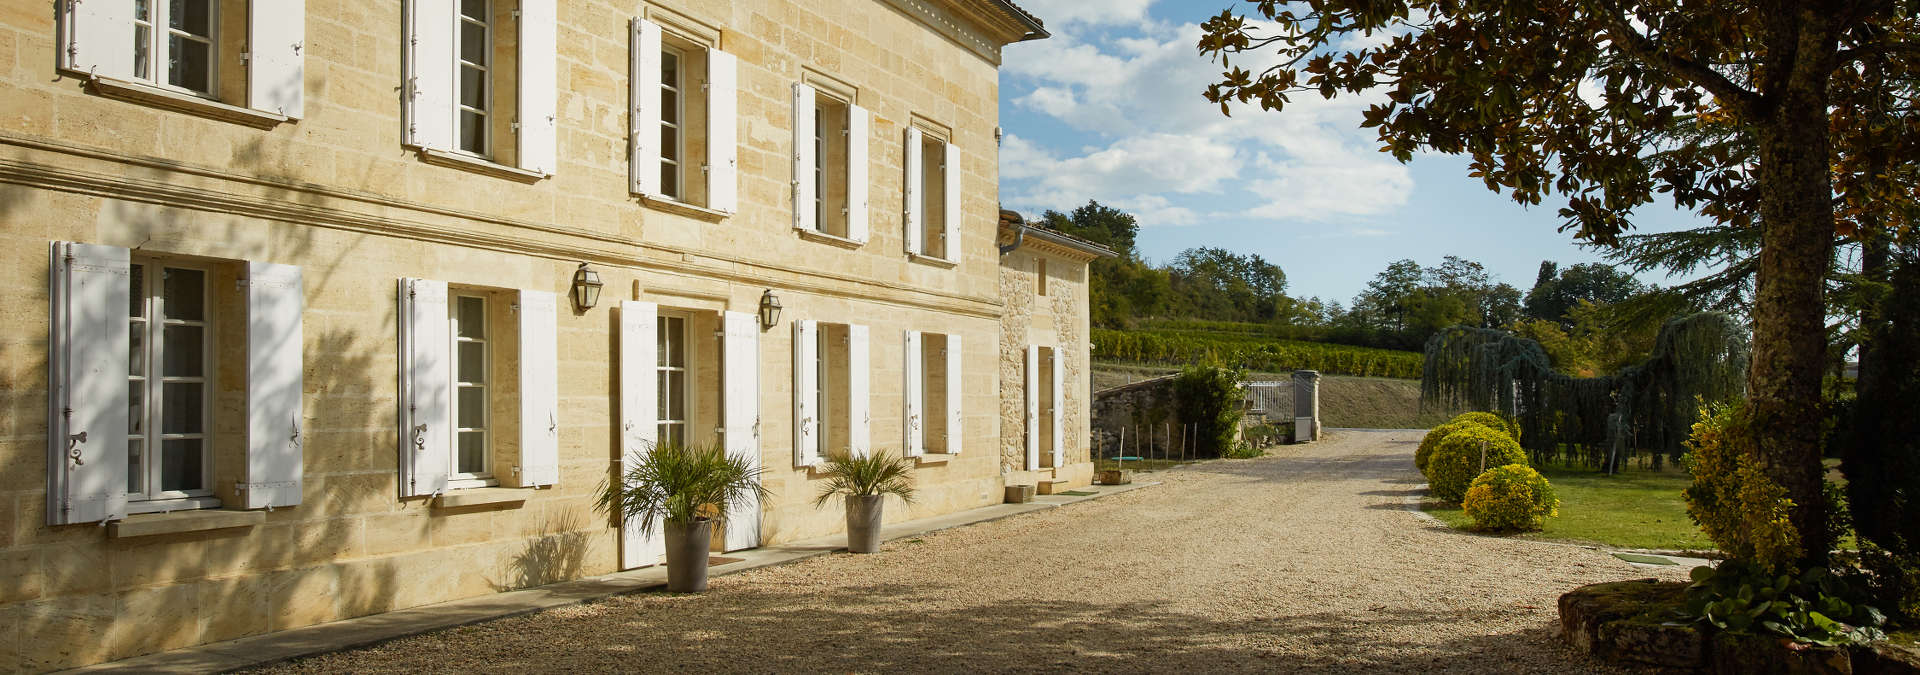 Chateau des Bertins 2019 Bordeaux – Irish Tipple